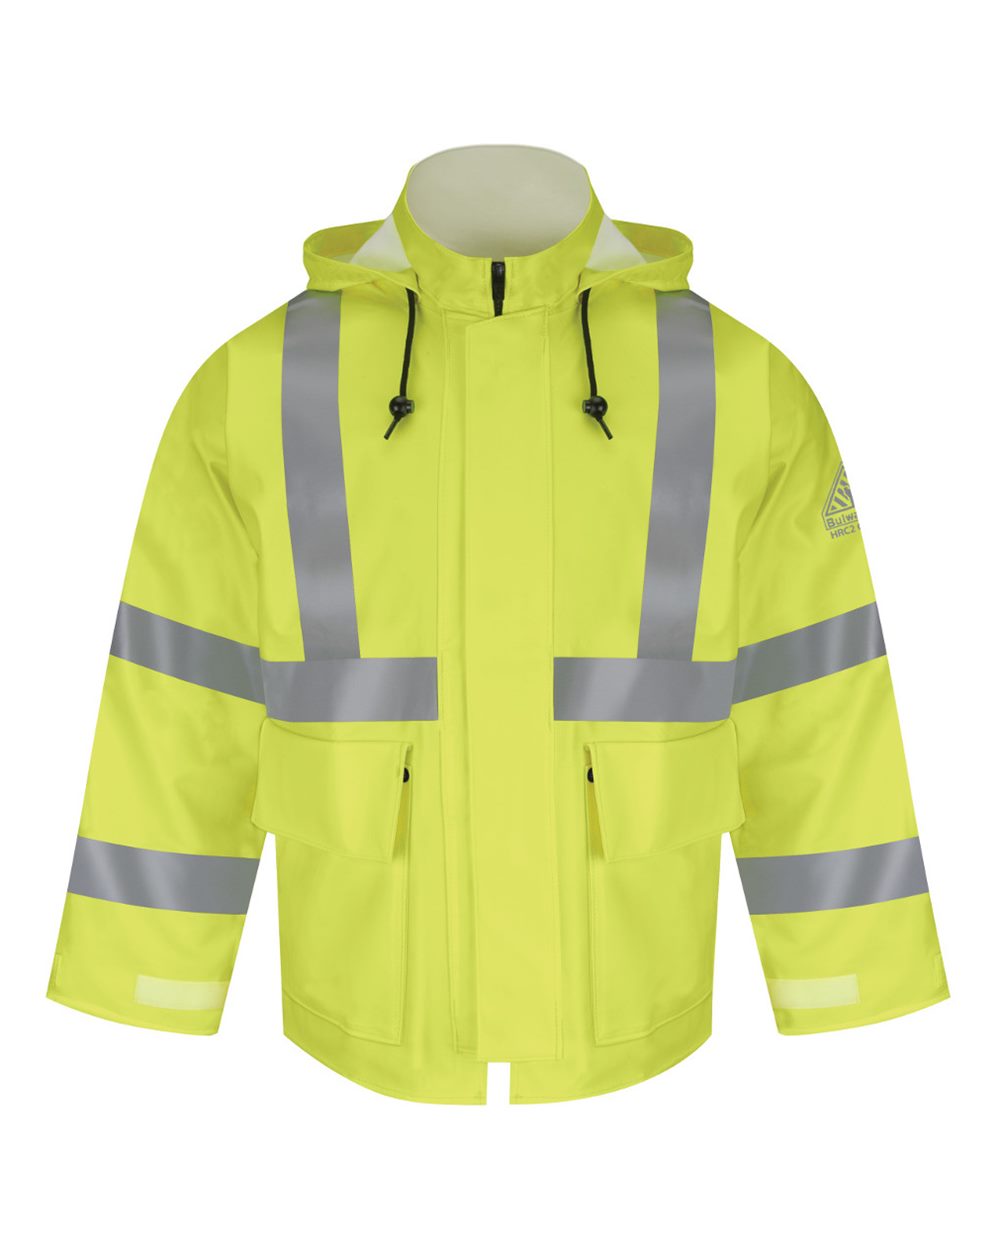 Hi-Visibility Flame-Resistant Rain Jacket-